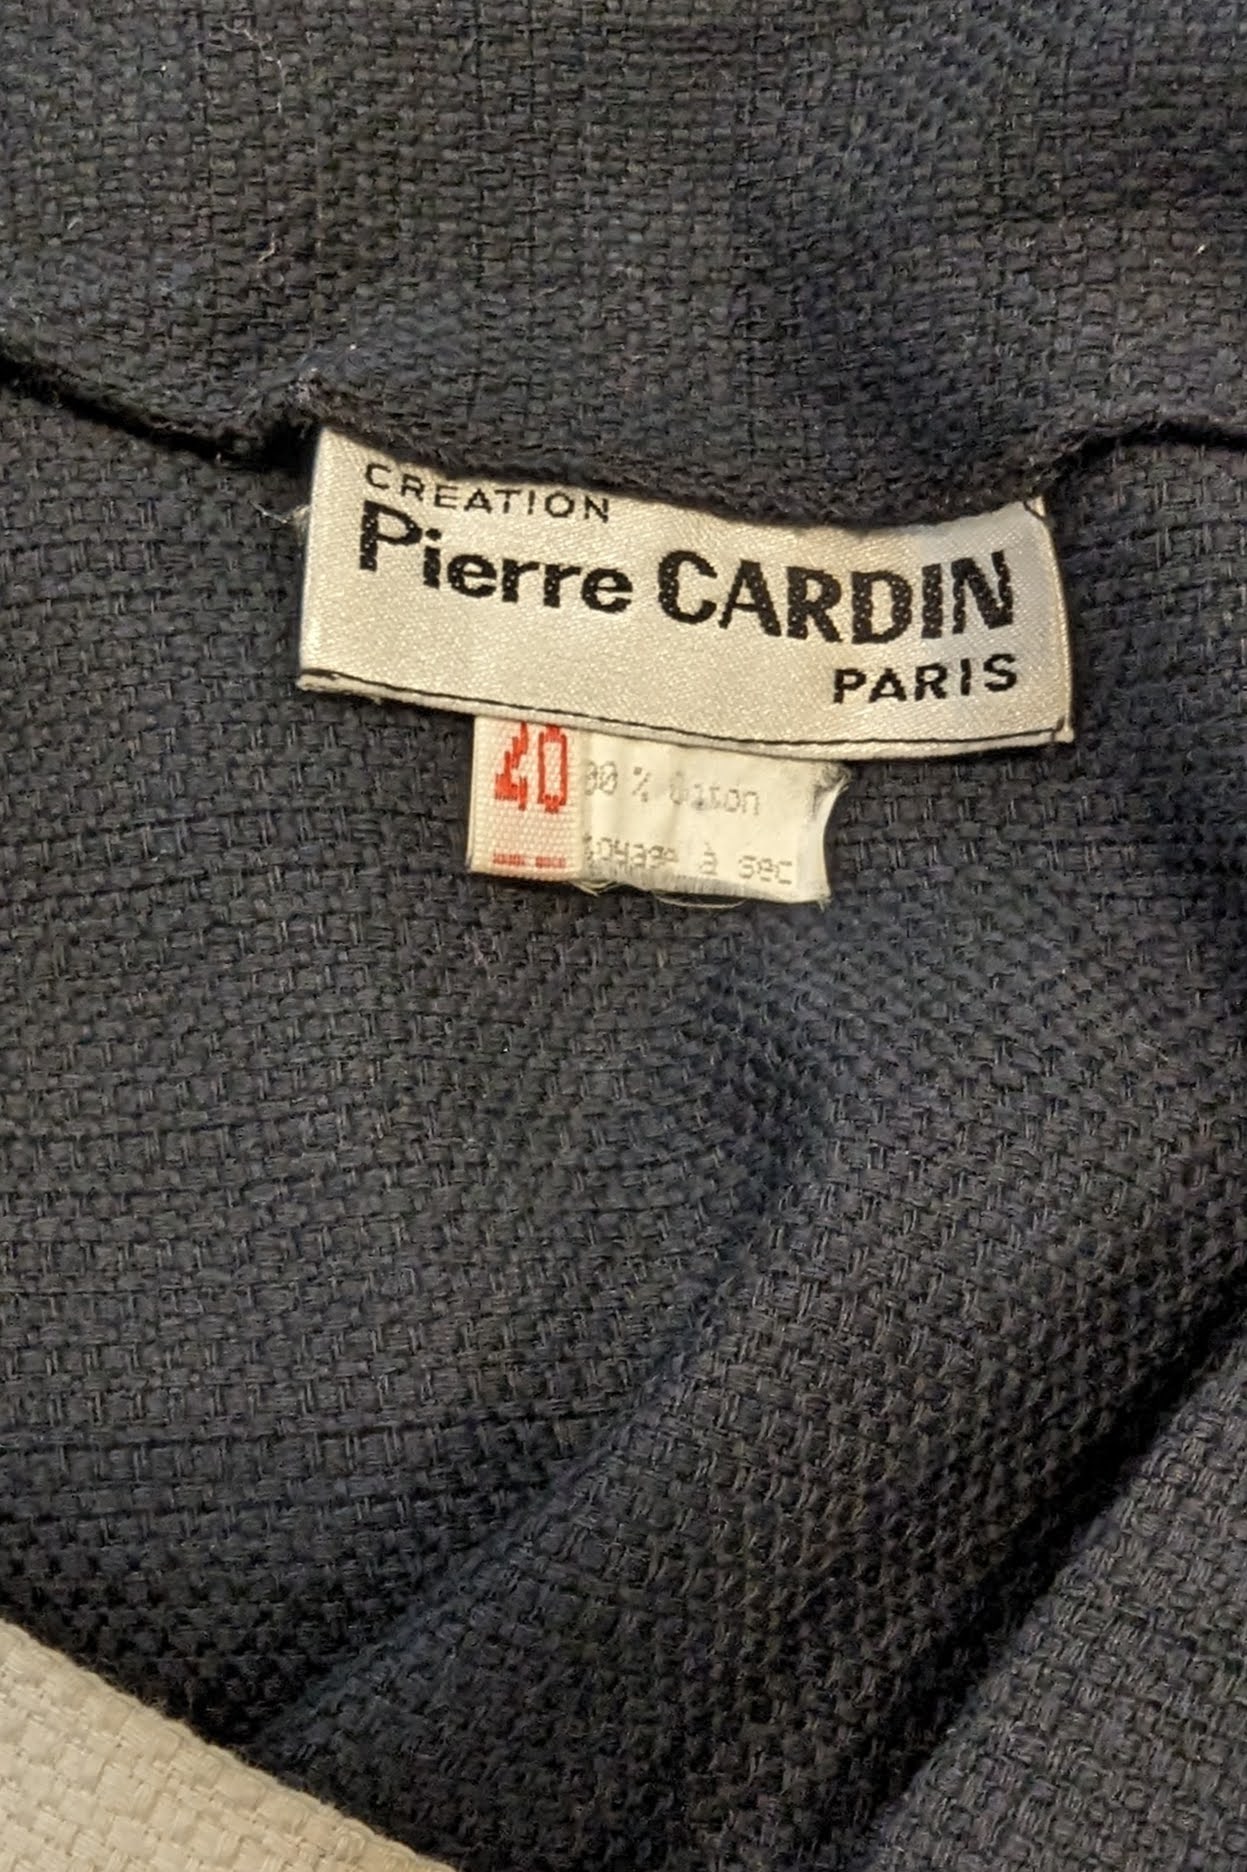 pierre cardin vintage label